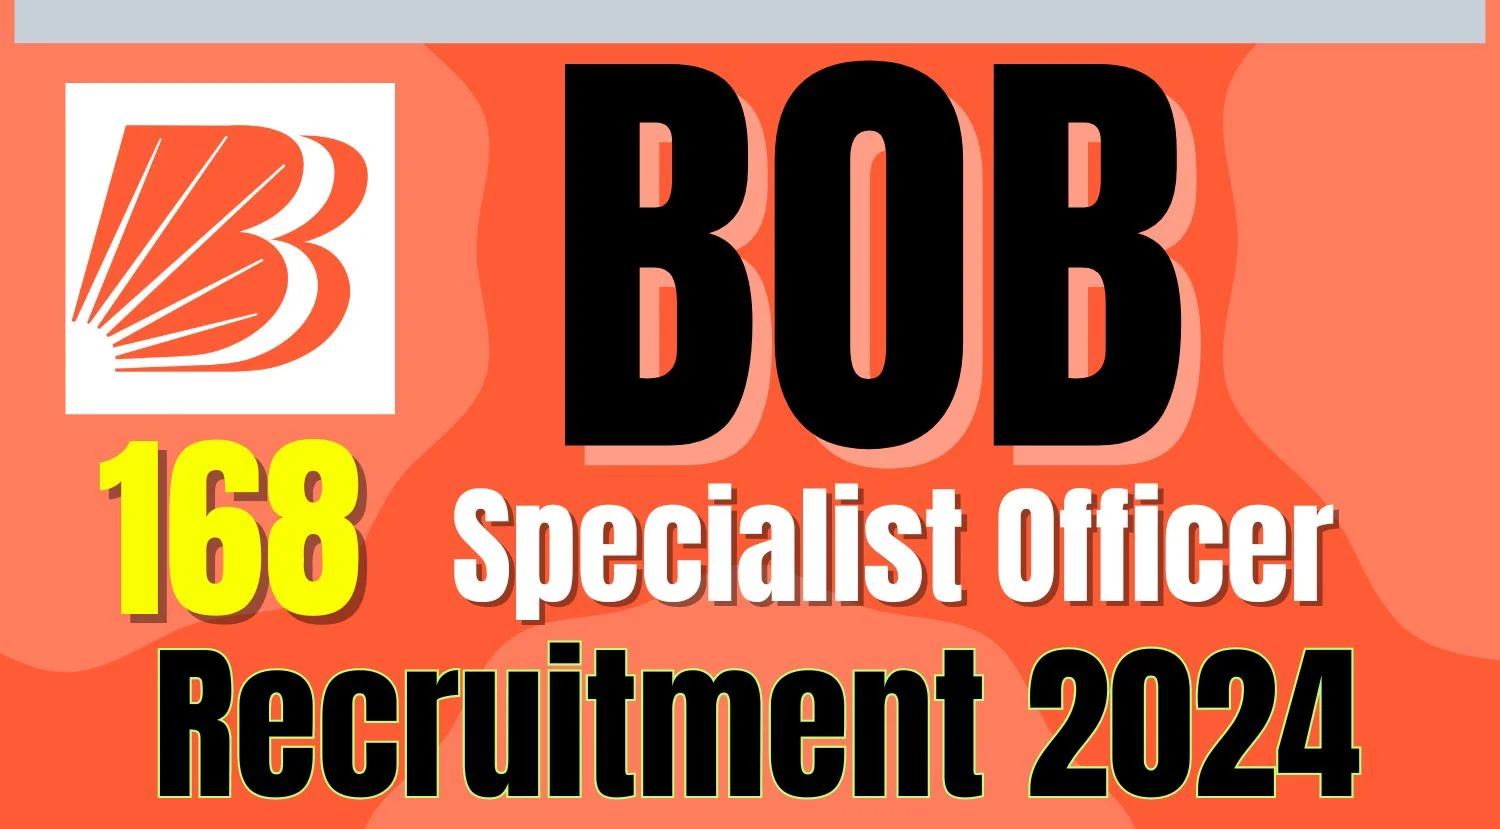 BOB 168 Specialist Officer Recruitment 2024